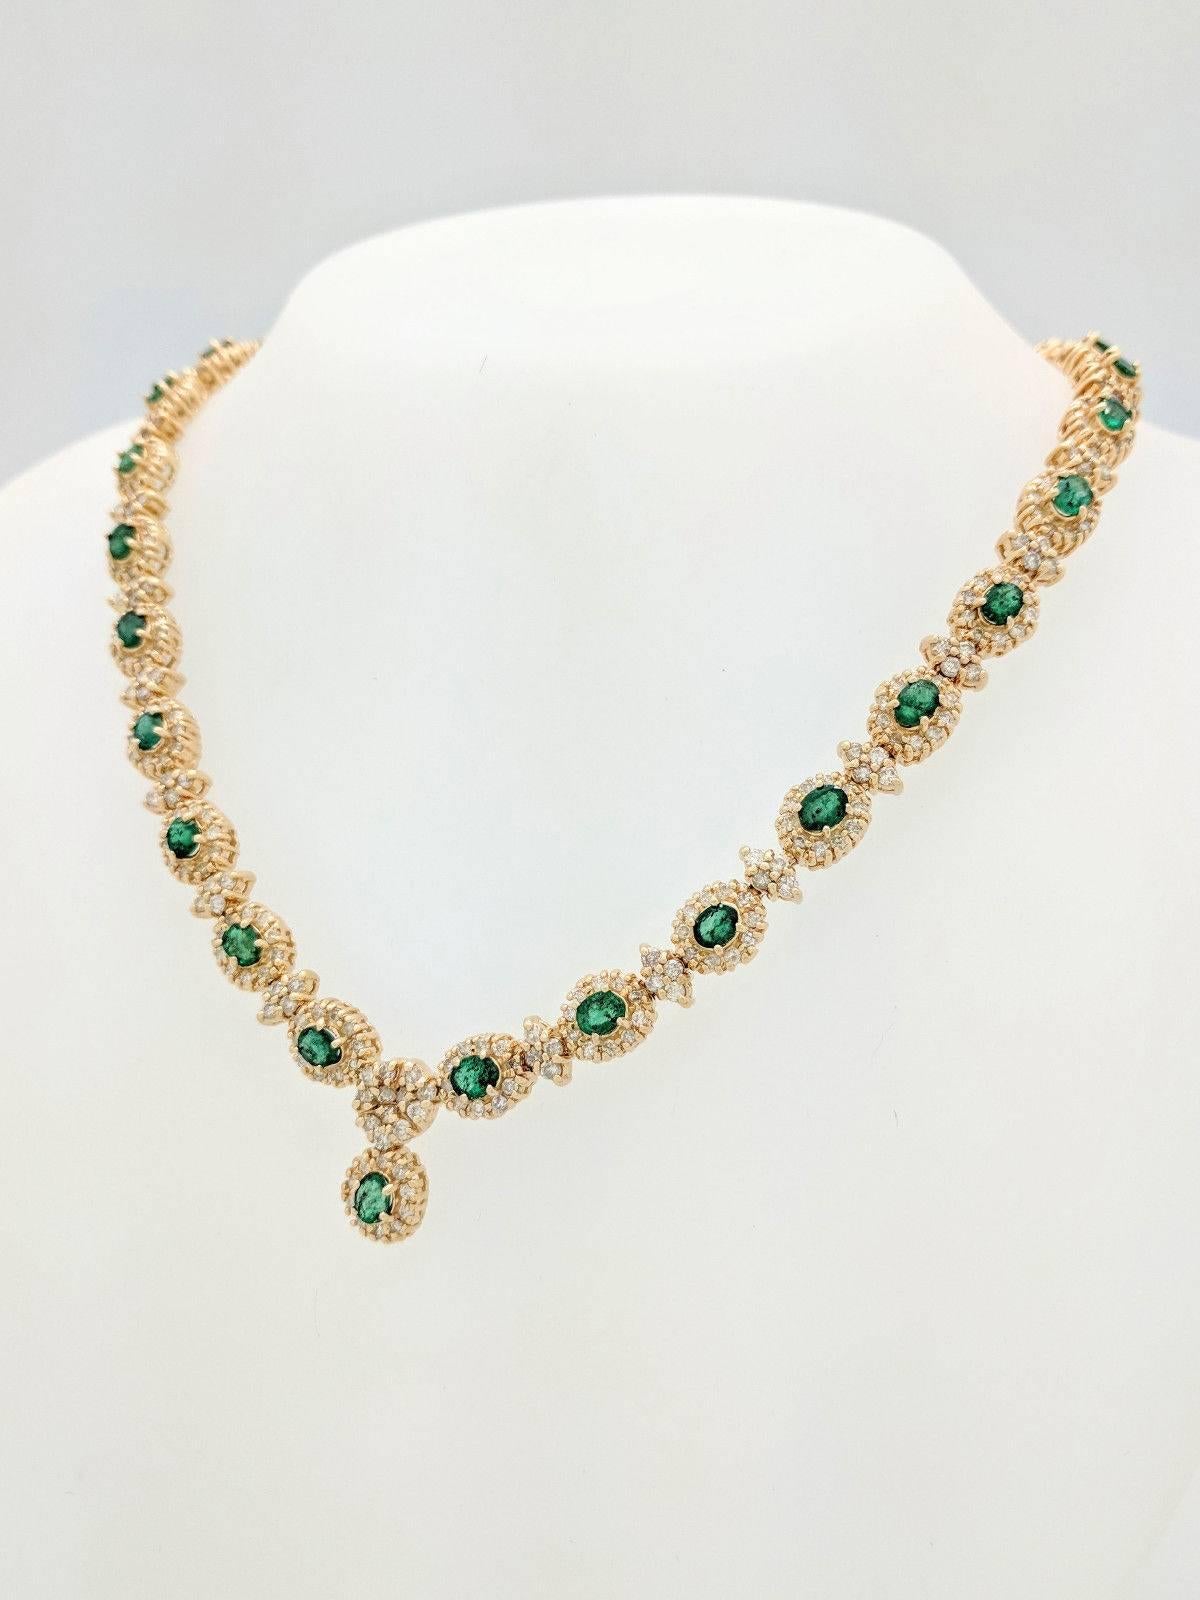 Victorian 14 Karat Gold 16.72 Carat Emerald and Diamond Tennis Necklace 54.8 Grams For Sale